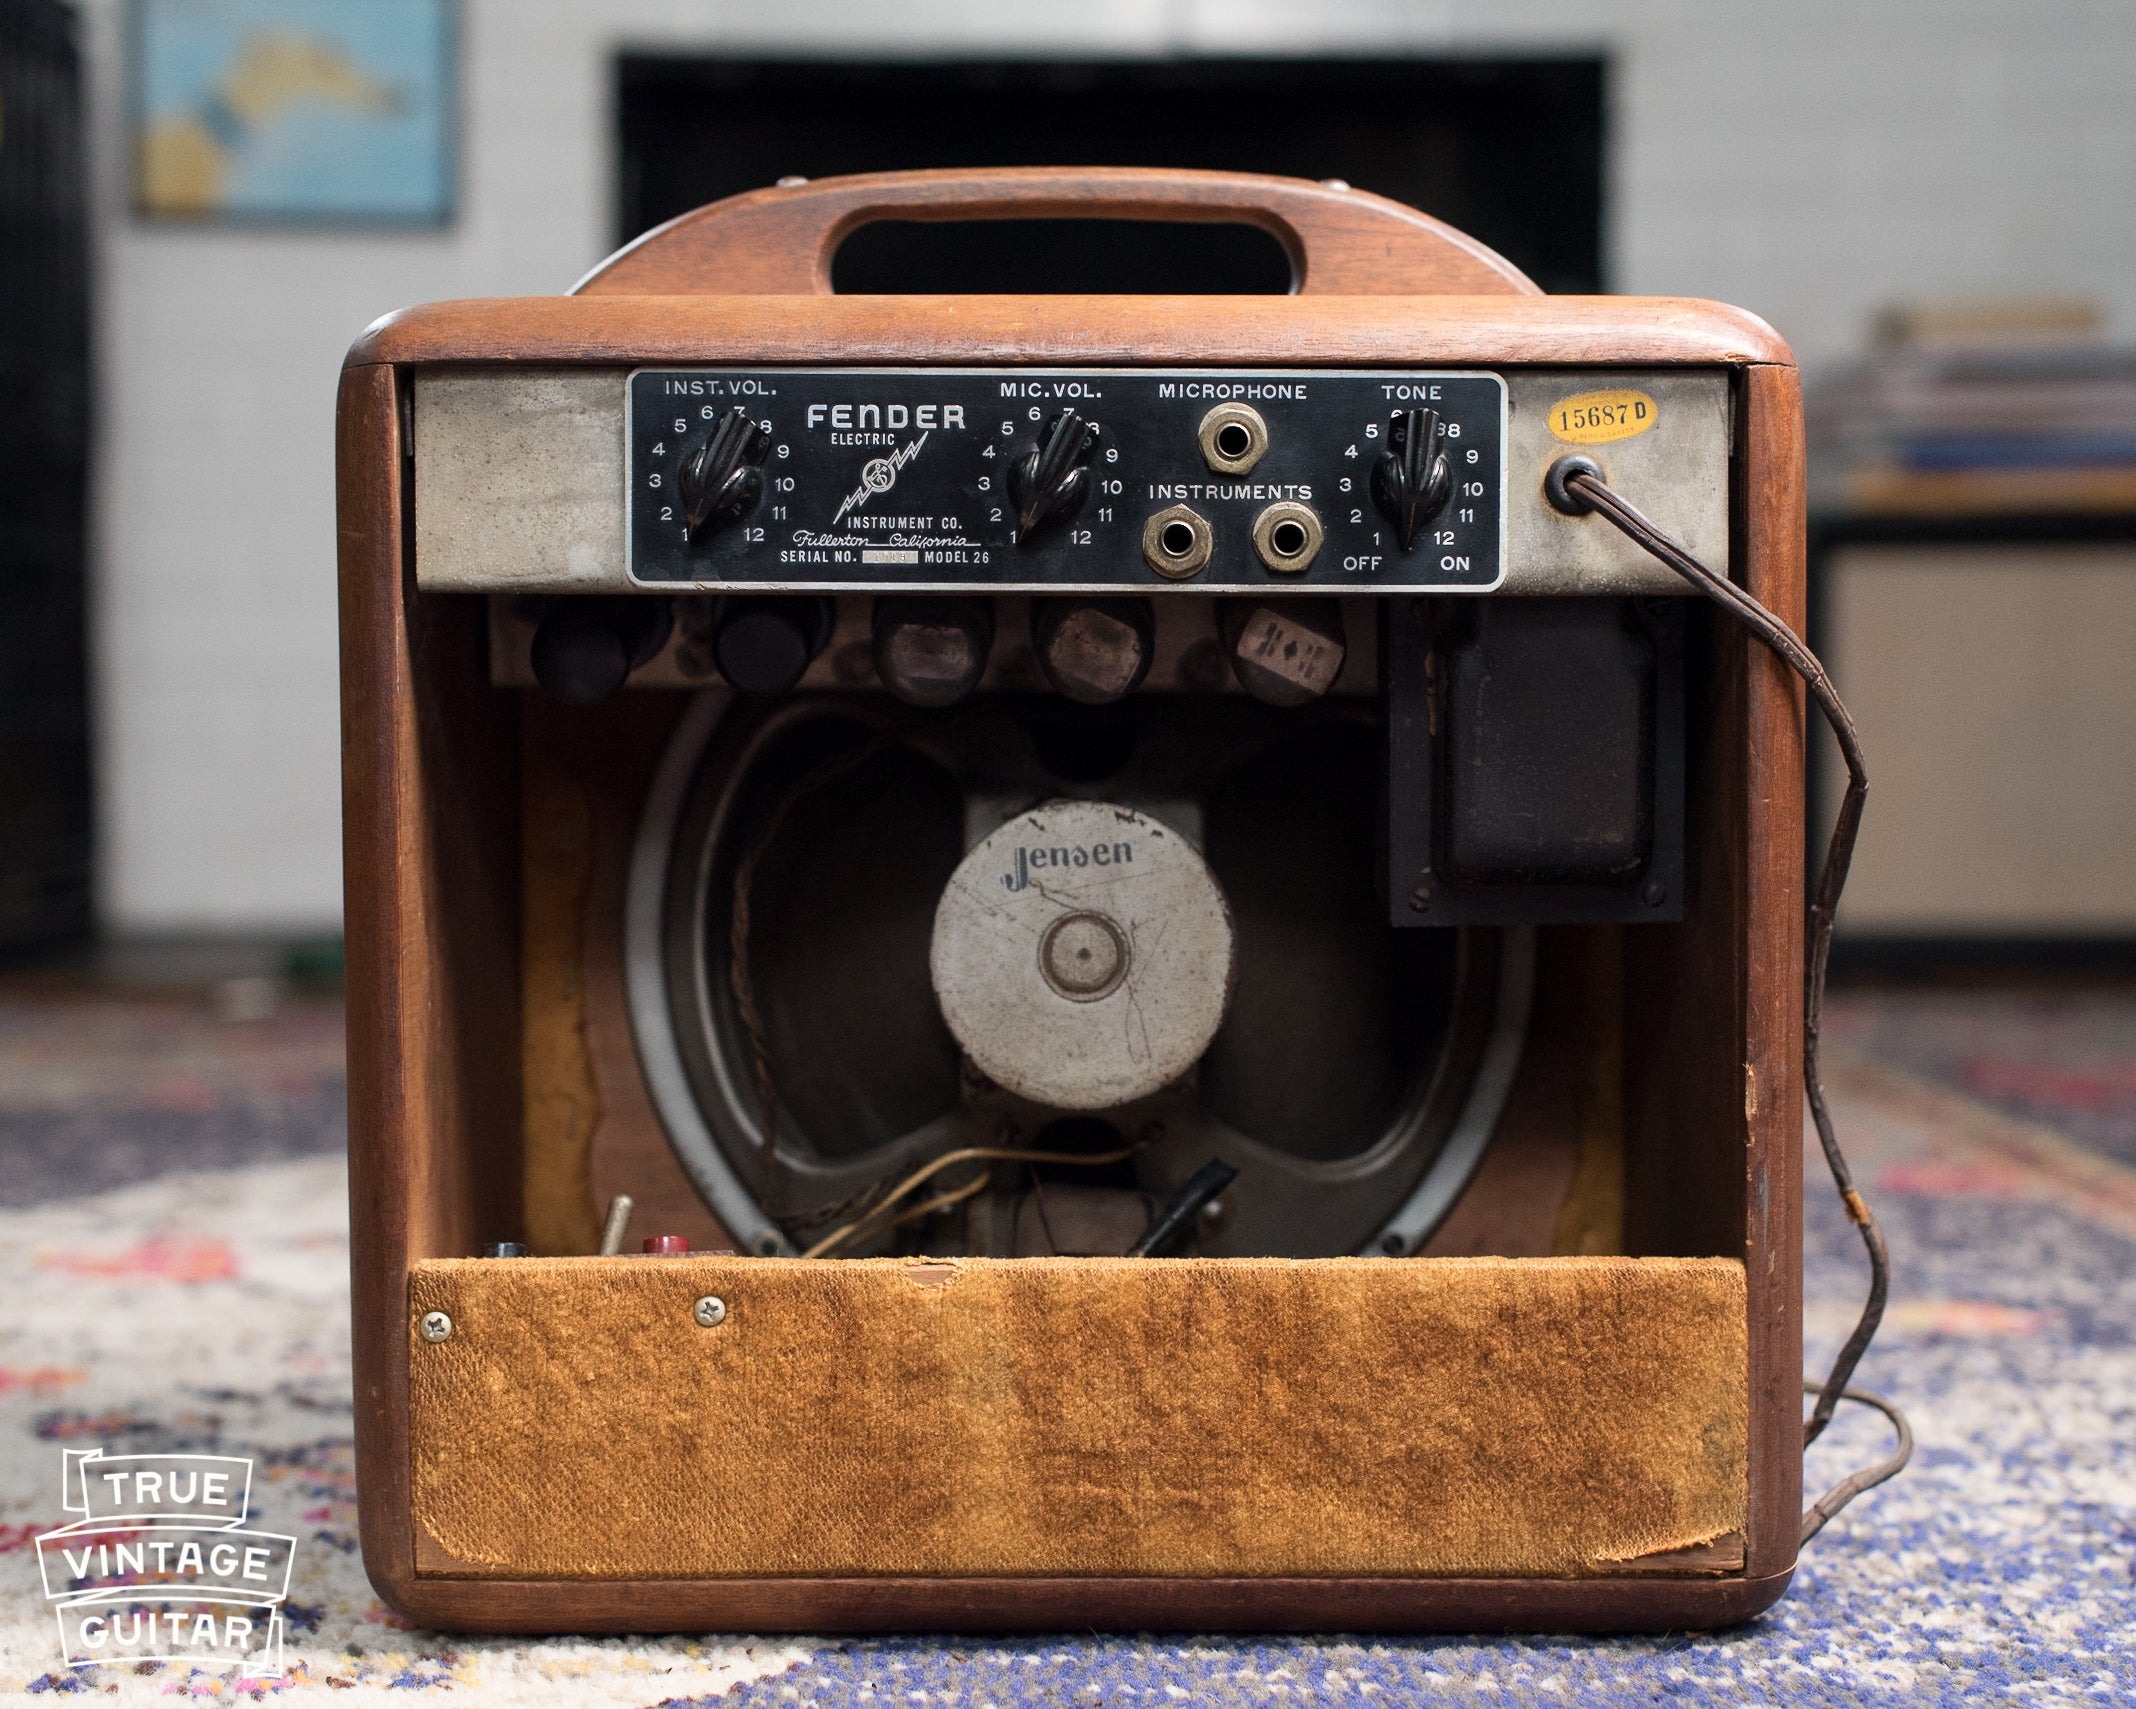 Jensen speaker, Vintage 1946 Fender Deluxe guitar Amplifier, woody, Walnut cabinet with gold grill cloth